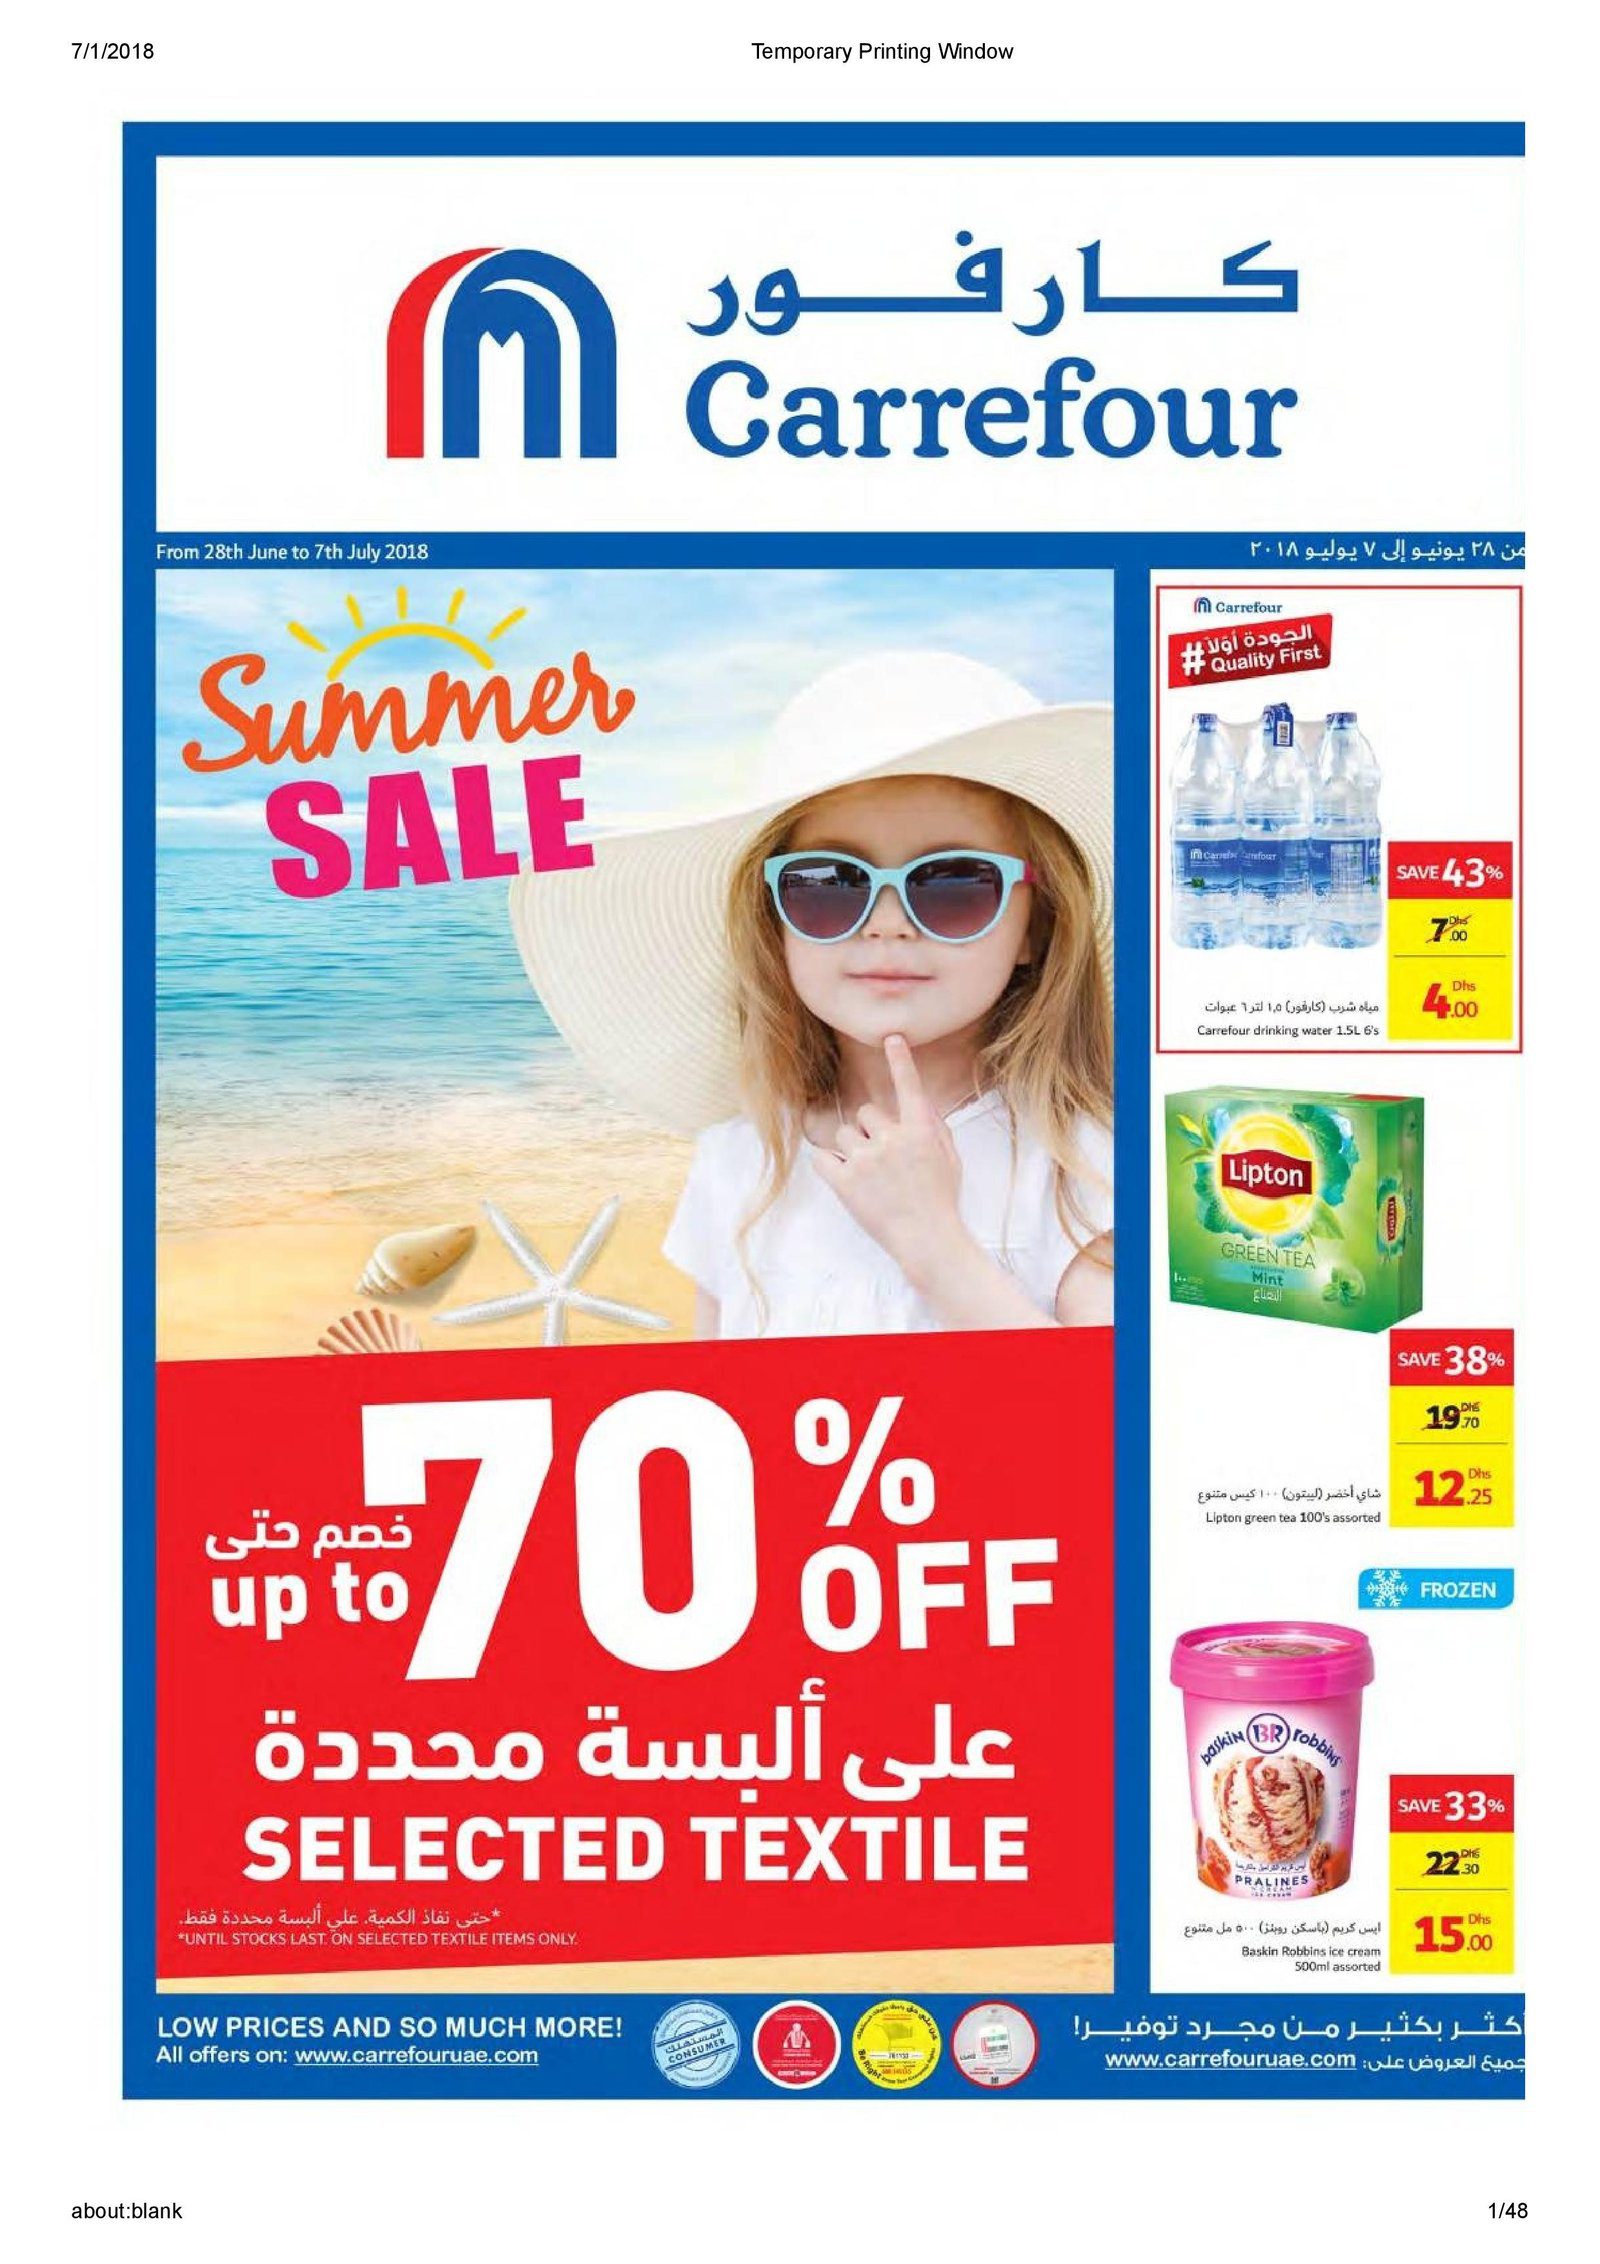 Carrefour Summer Sale